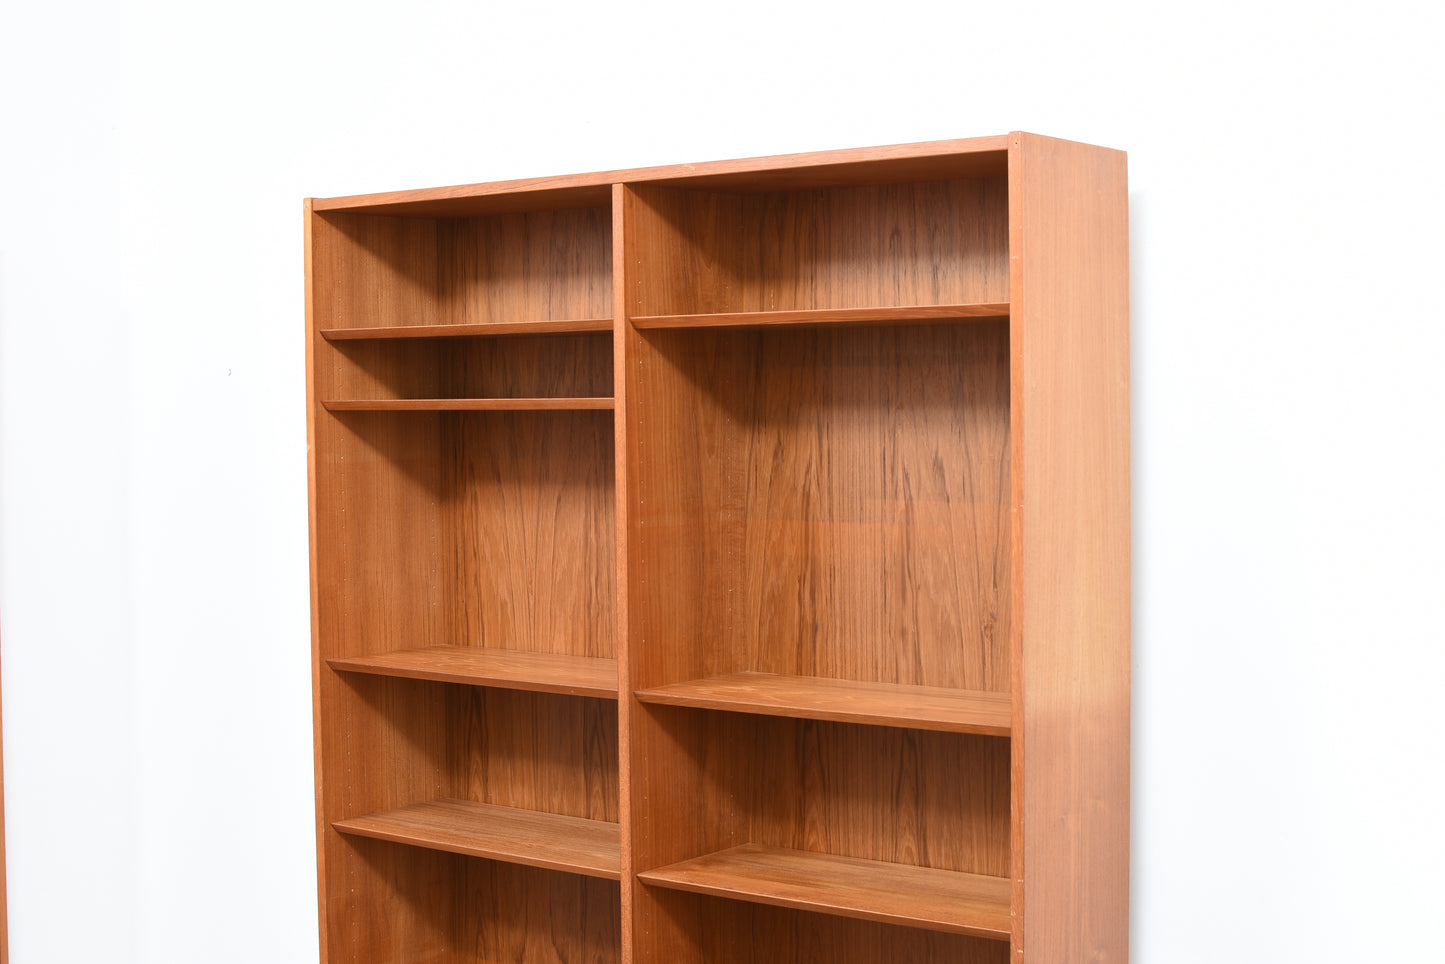 Large teak bookshelf by Poul Hundevad